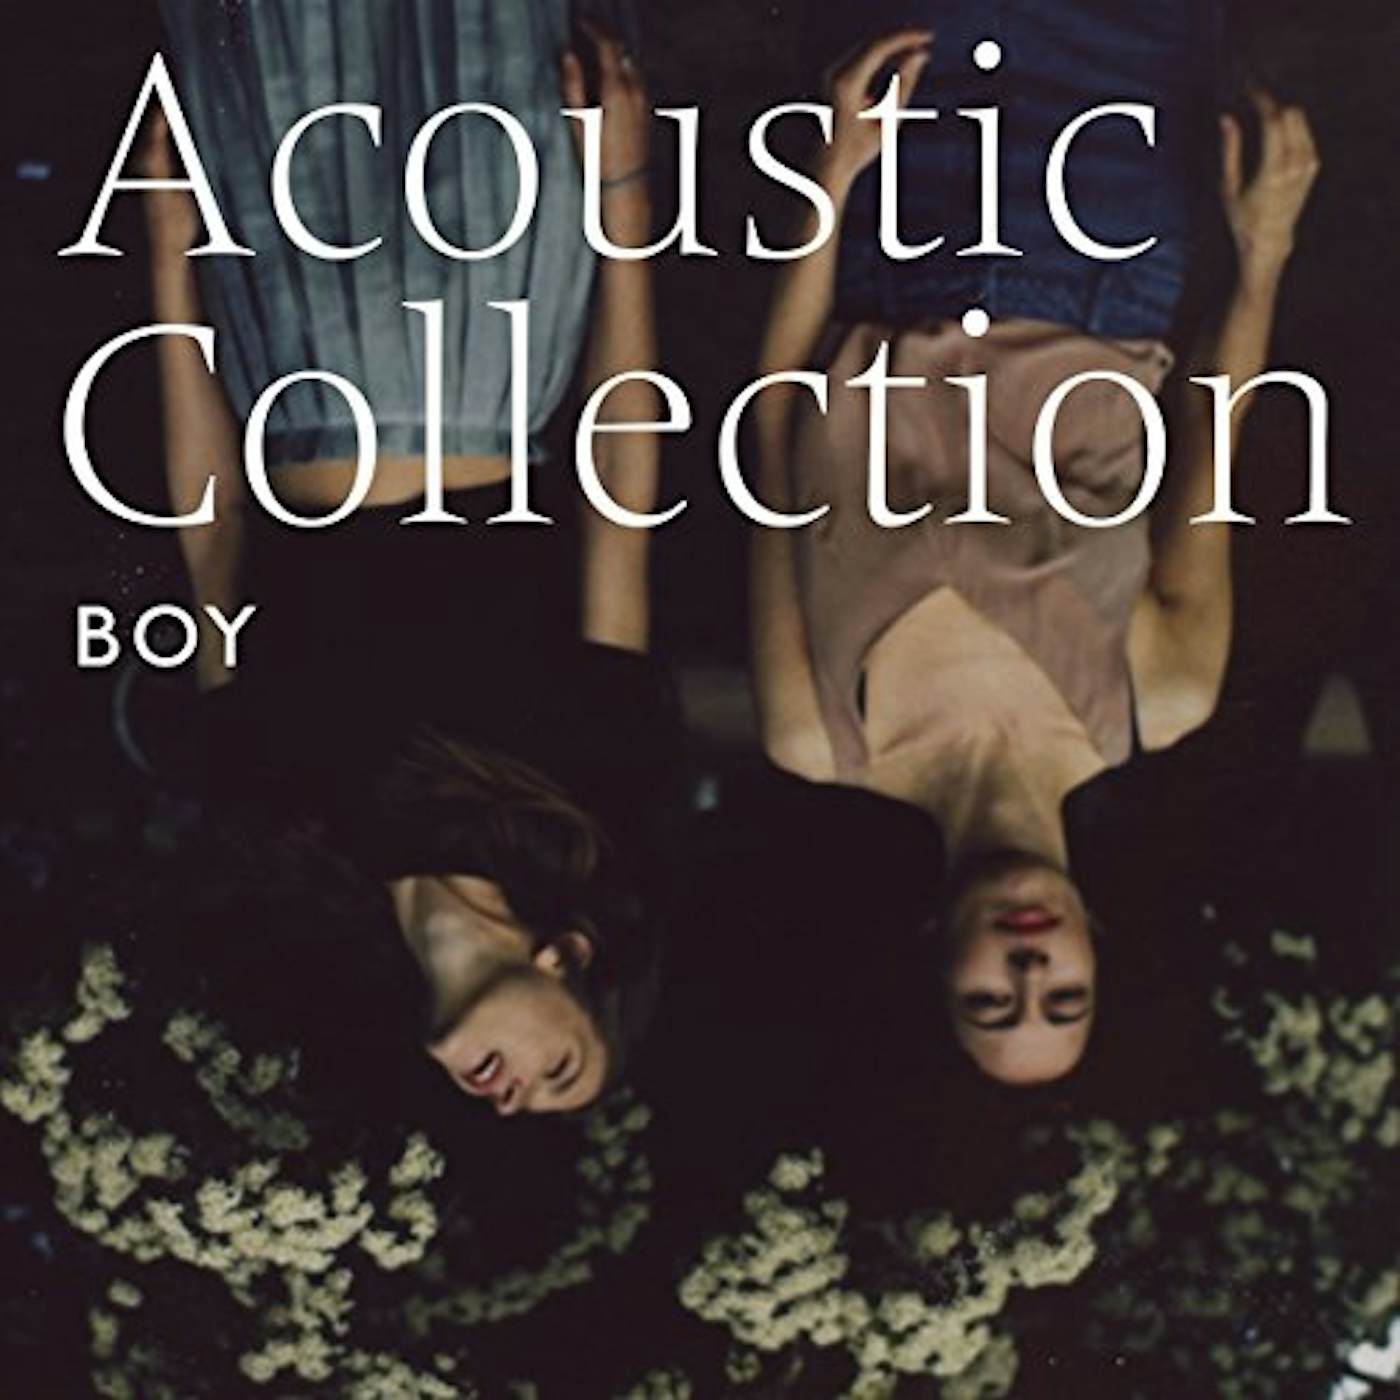 BOY Acoustic Collection Vinyl Record